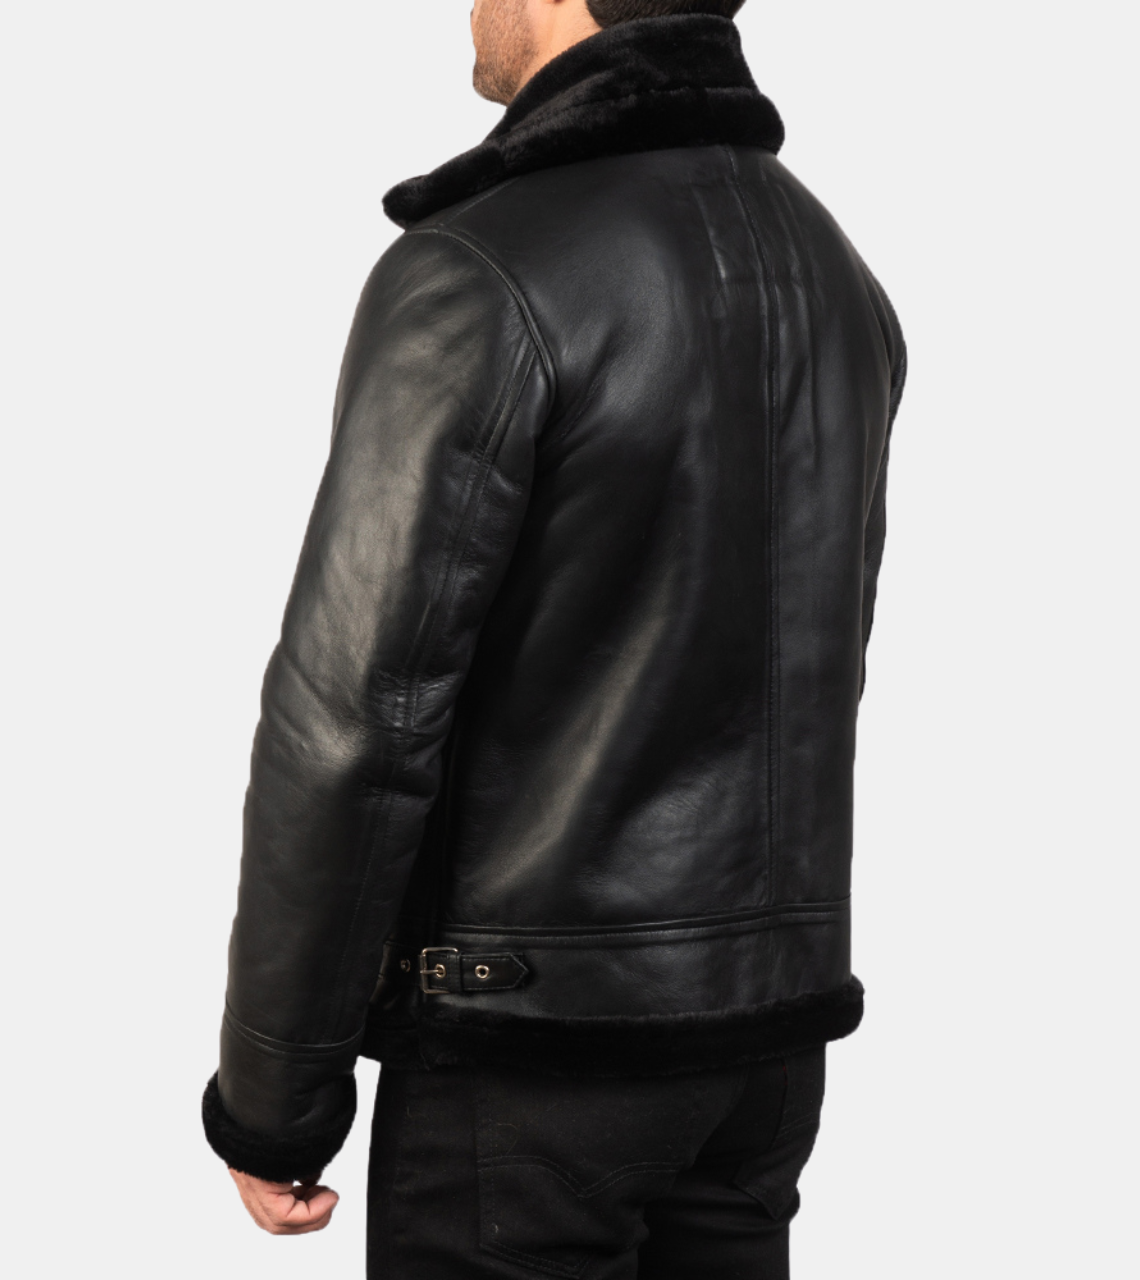  Black Shearling Leather Jacket